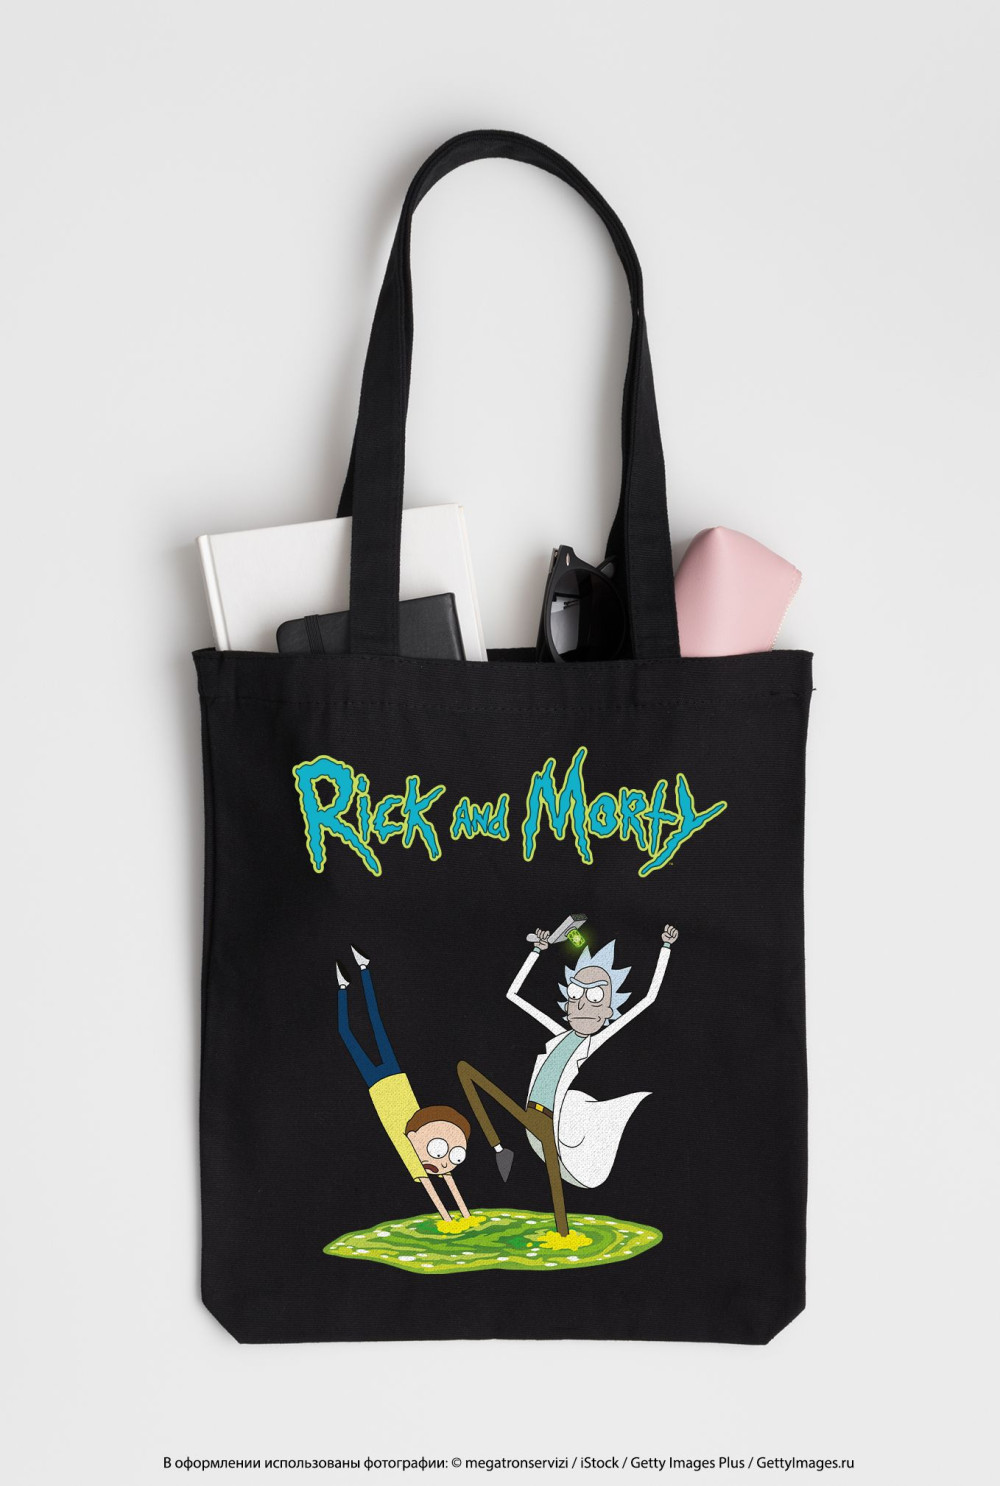 Набор Rick And Morty сумка Портал чёрная + блокнот Рик в космосе + термо-кружка СтаРИК и седалище